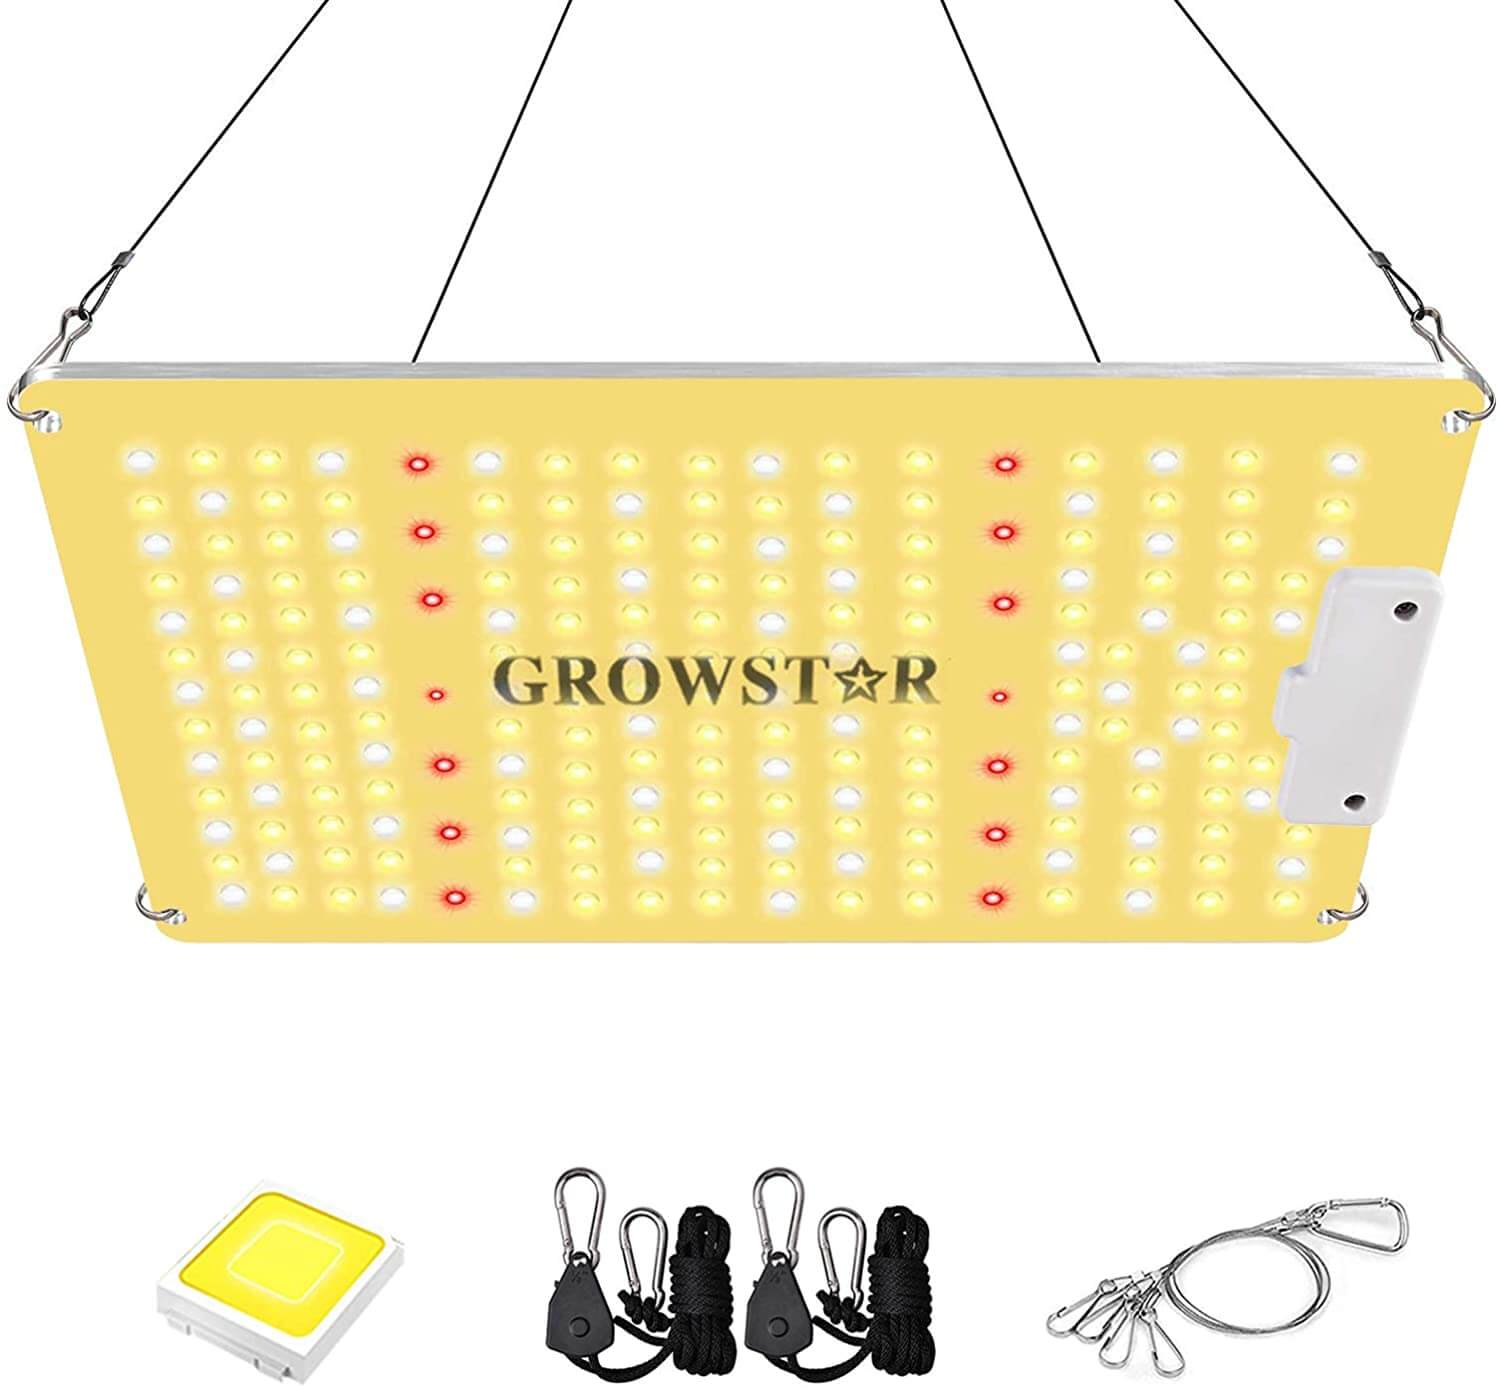 GROWSTAR GROWSTAR - Sunlike Full Specturm LED Grow Lamp